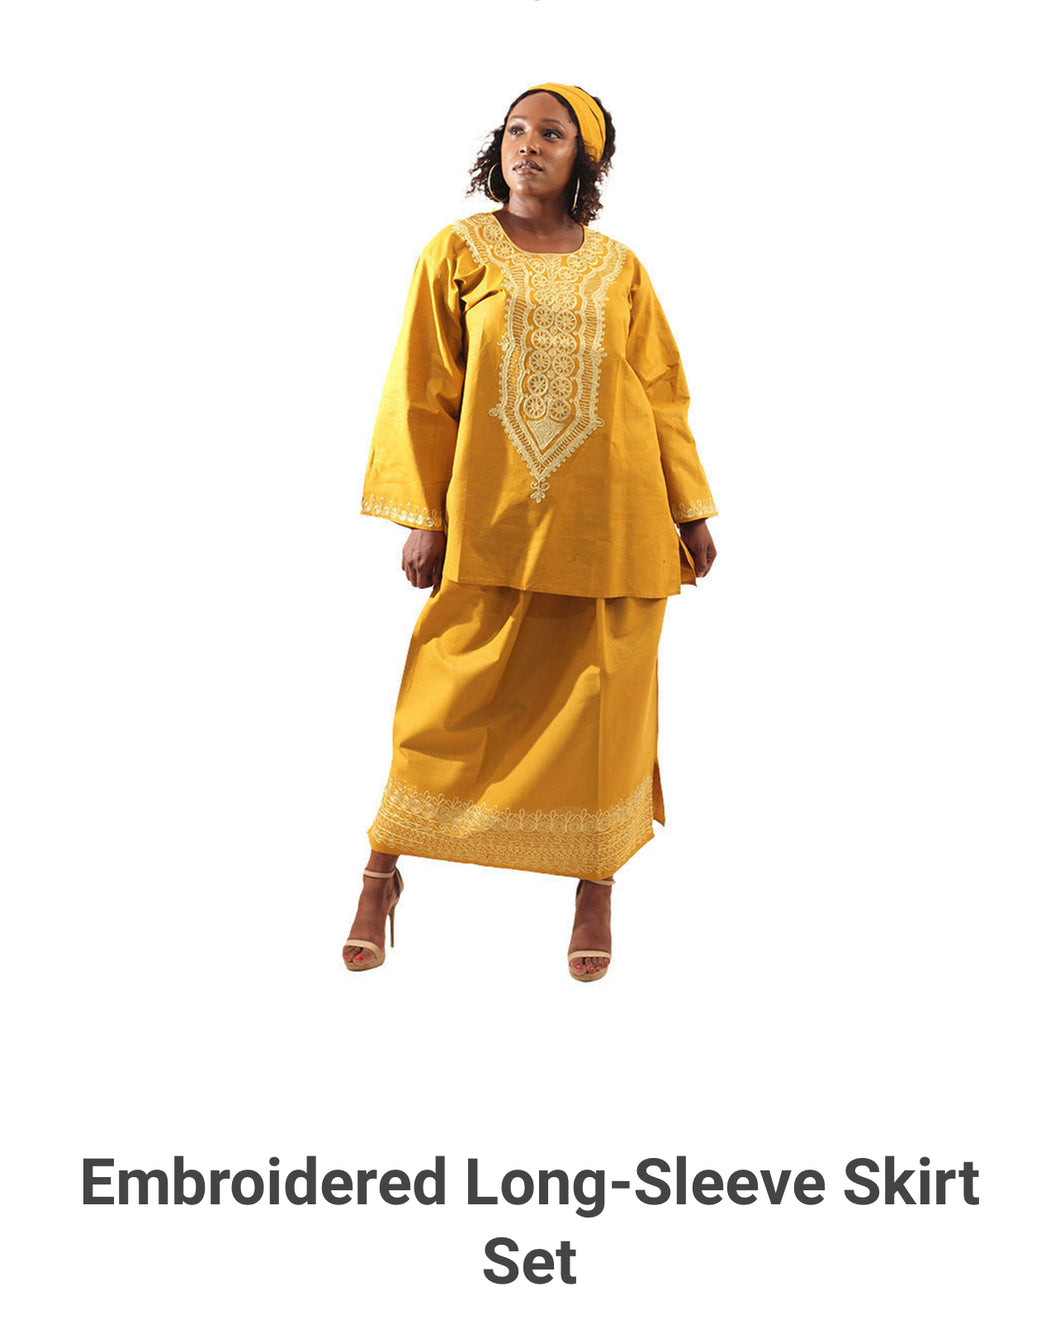 Embroidered Long-Sleeve Skirt Set